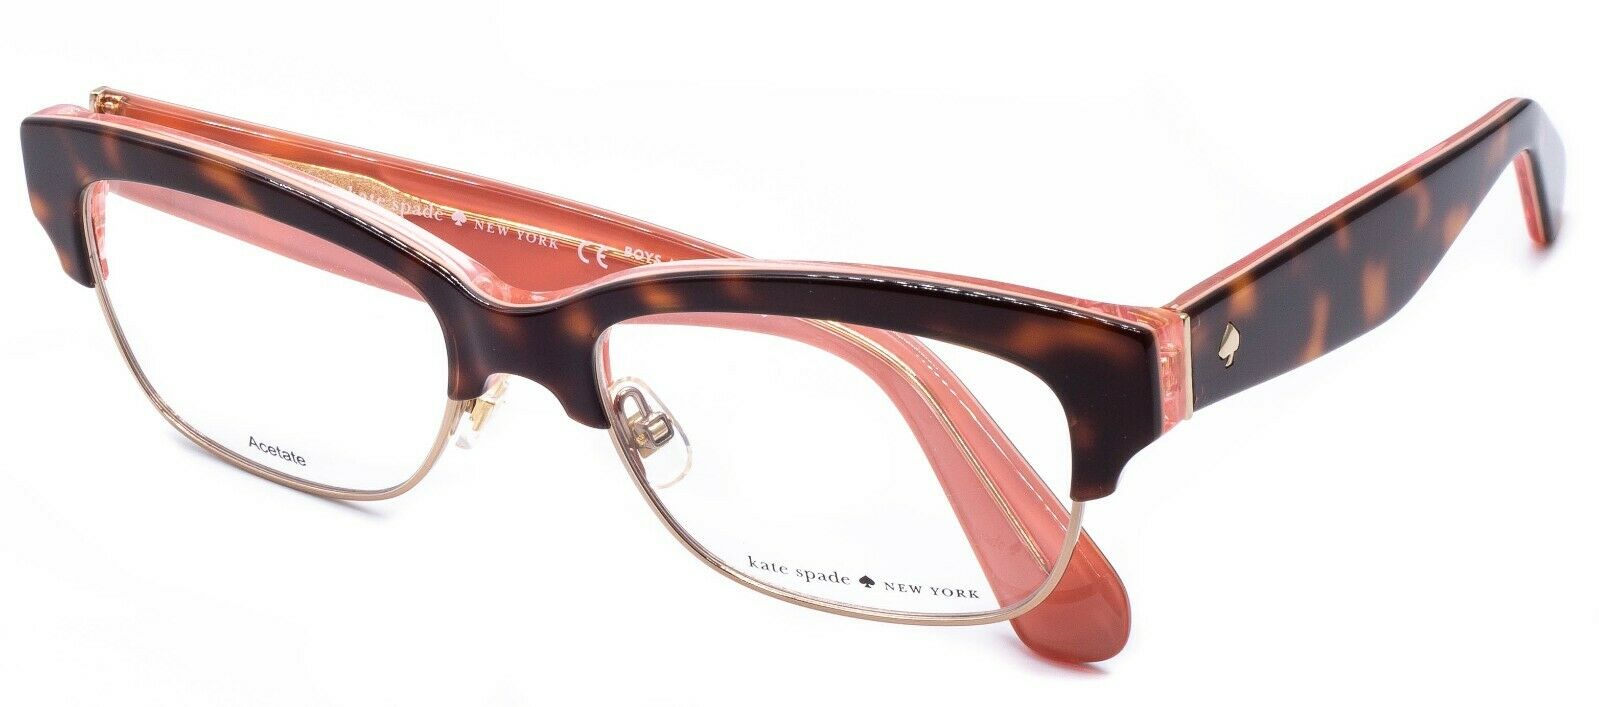 KATE SPADE NEW YORK SHANTAL QTQ 52mm Eyewear Glasses RX Optical Eyeglasses  - New - GGV Eyewear